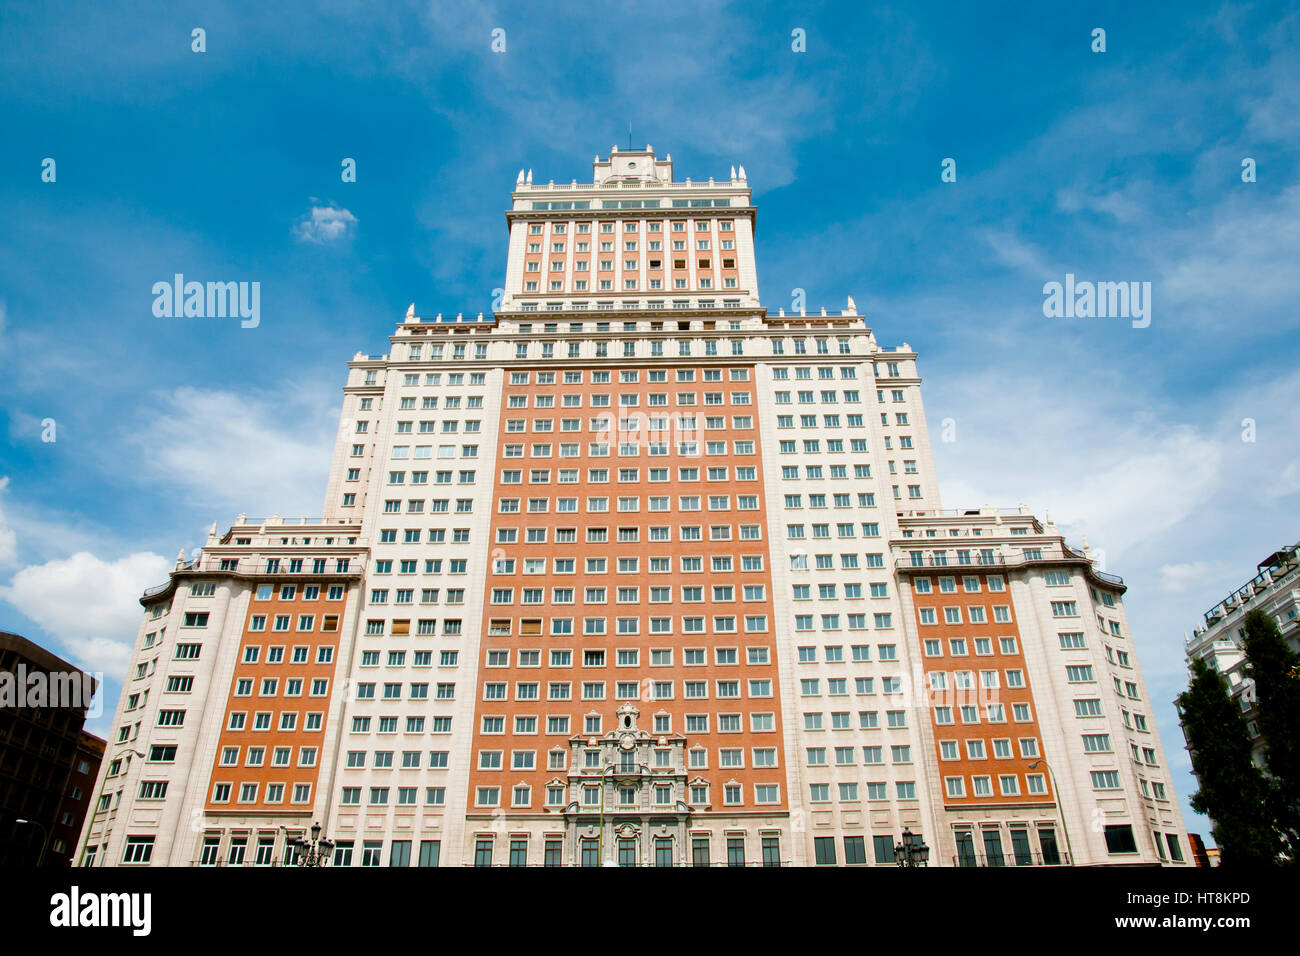 Edificio Espana (Spain Building) - Madrid - Spain Stock Photo